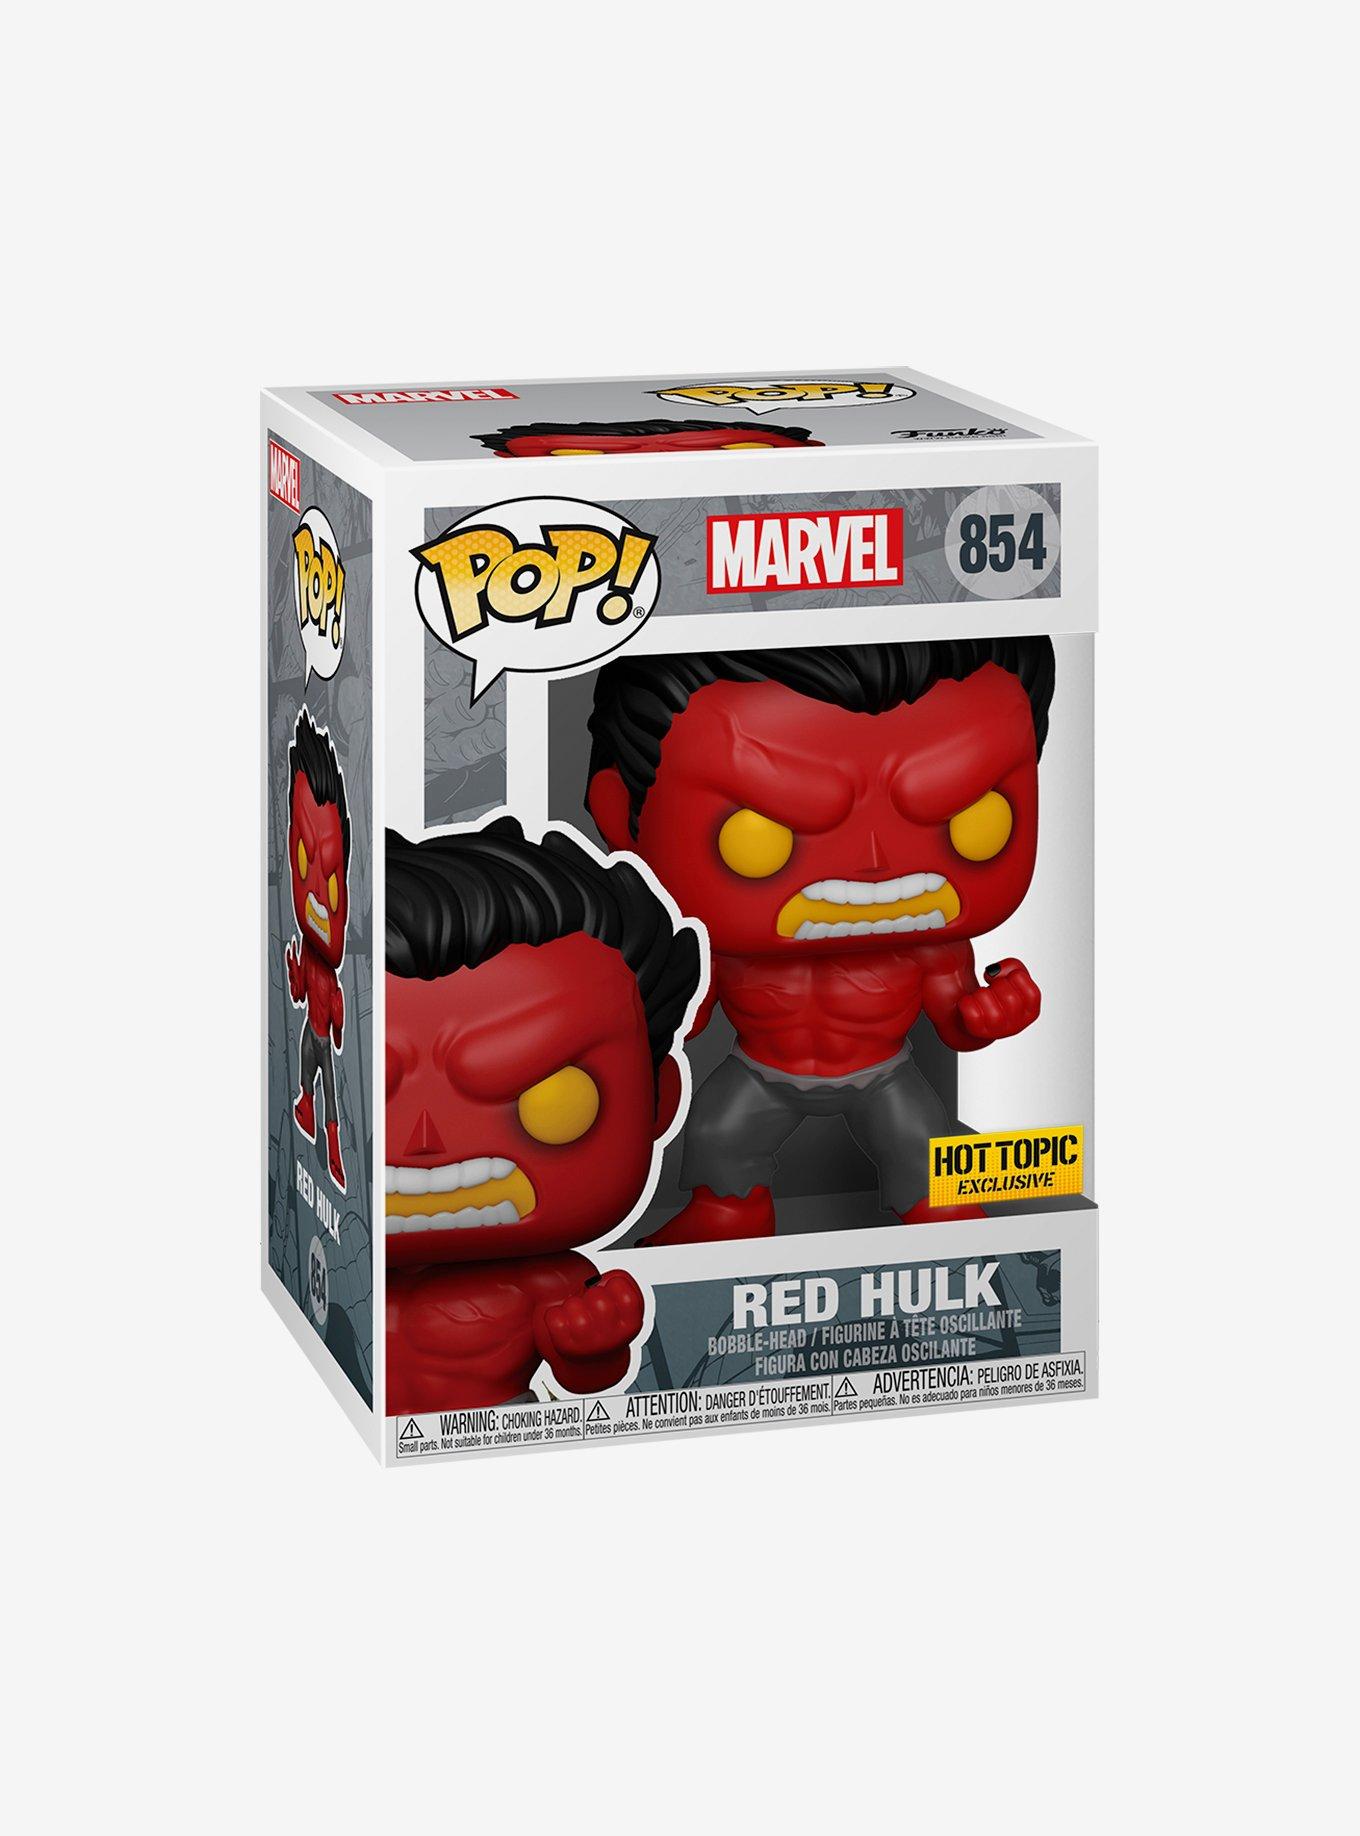 Kritisch Manie Graden Celsius Funko Marvel Pop! Red Hulk Vinyl Bobble-Head HT Exclusive | Hot Topic